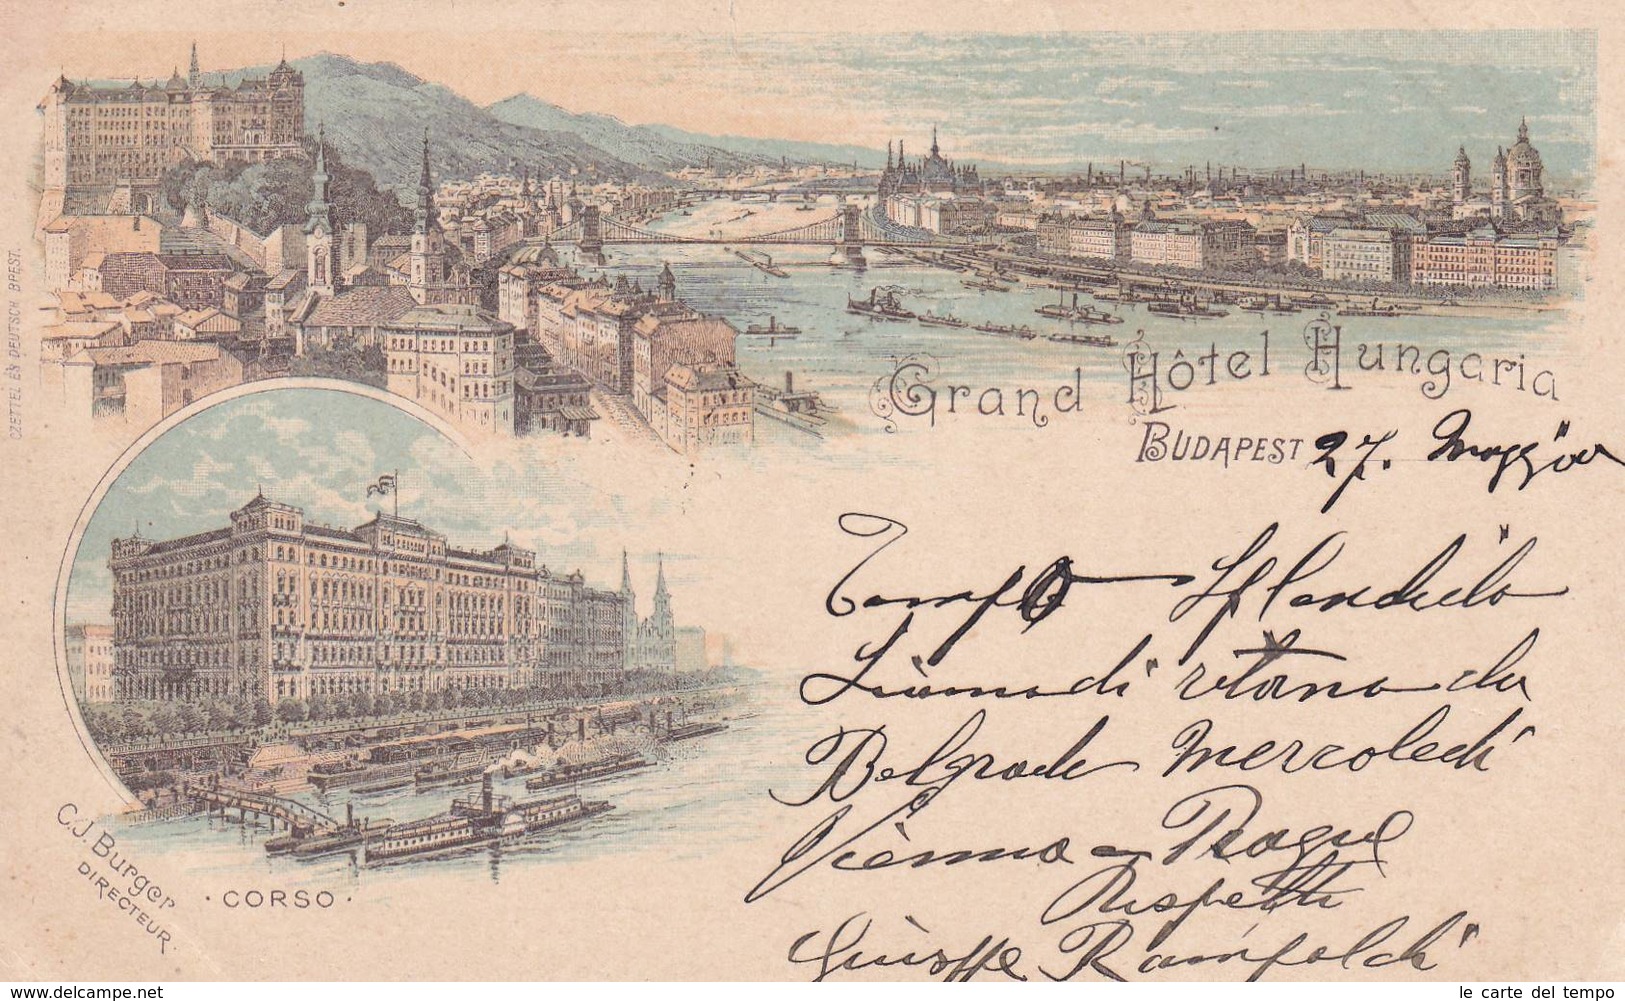 Cartolina Grand Hotel Hungaria - Budapest. 1928 - Ungheria